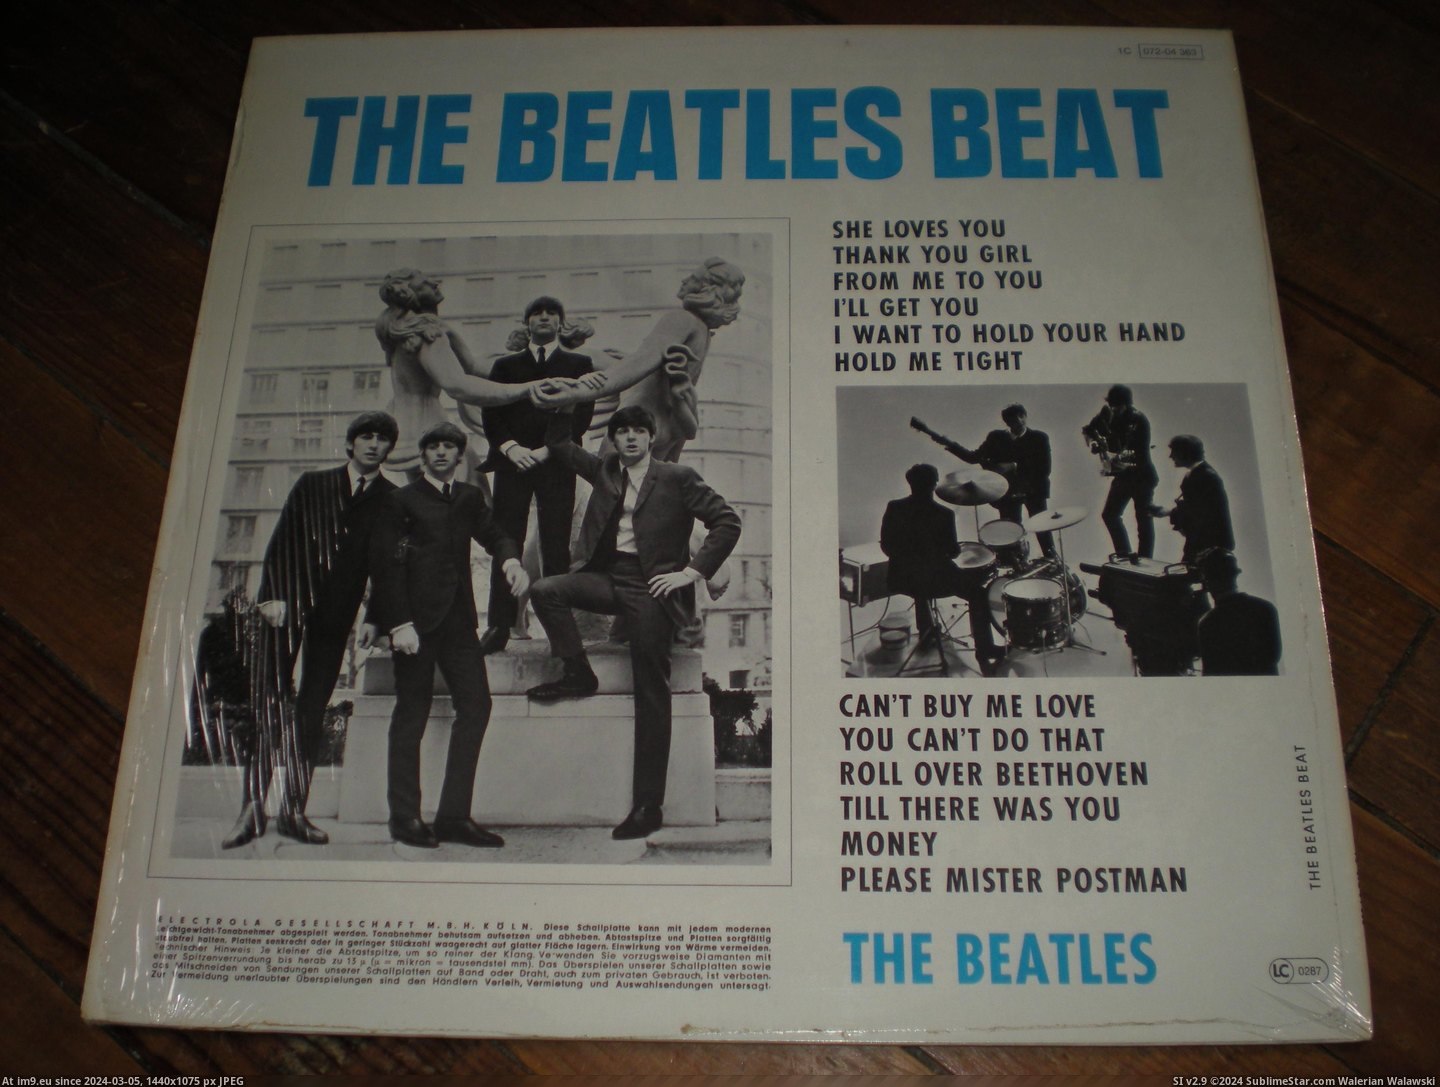 #Beatles #Beat #Odeon Beatles Beat ODEON 7 Pic. (Obraz z album new 1))